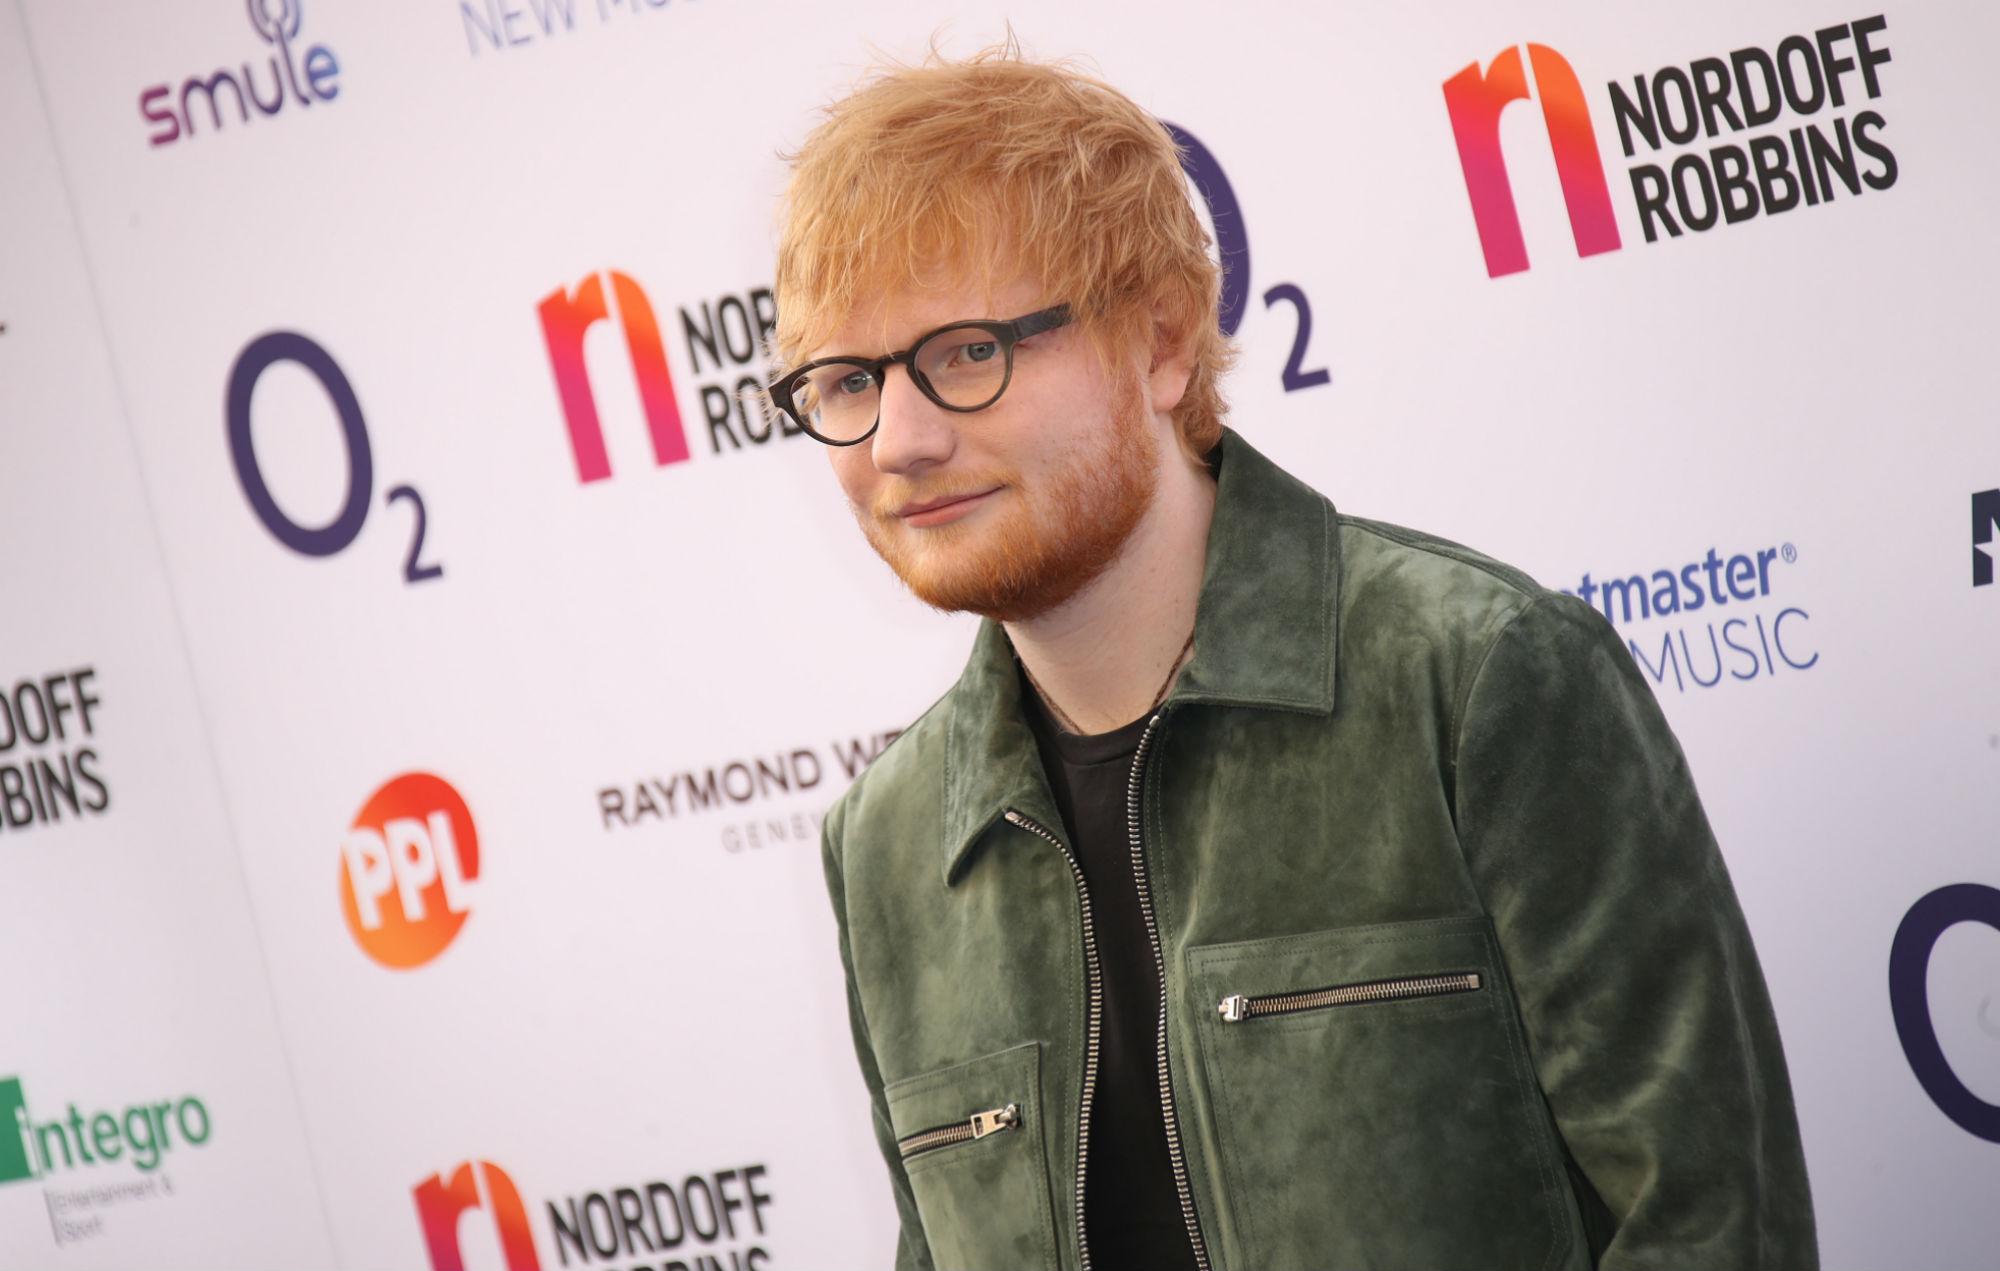 Ed Sheeran has broken another streaming record